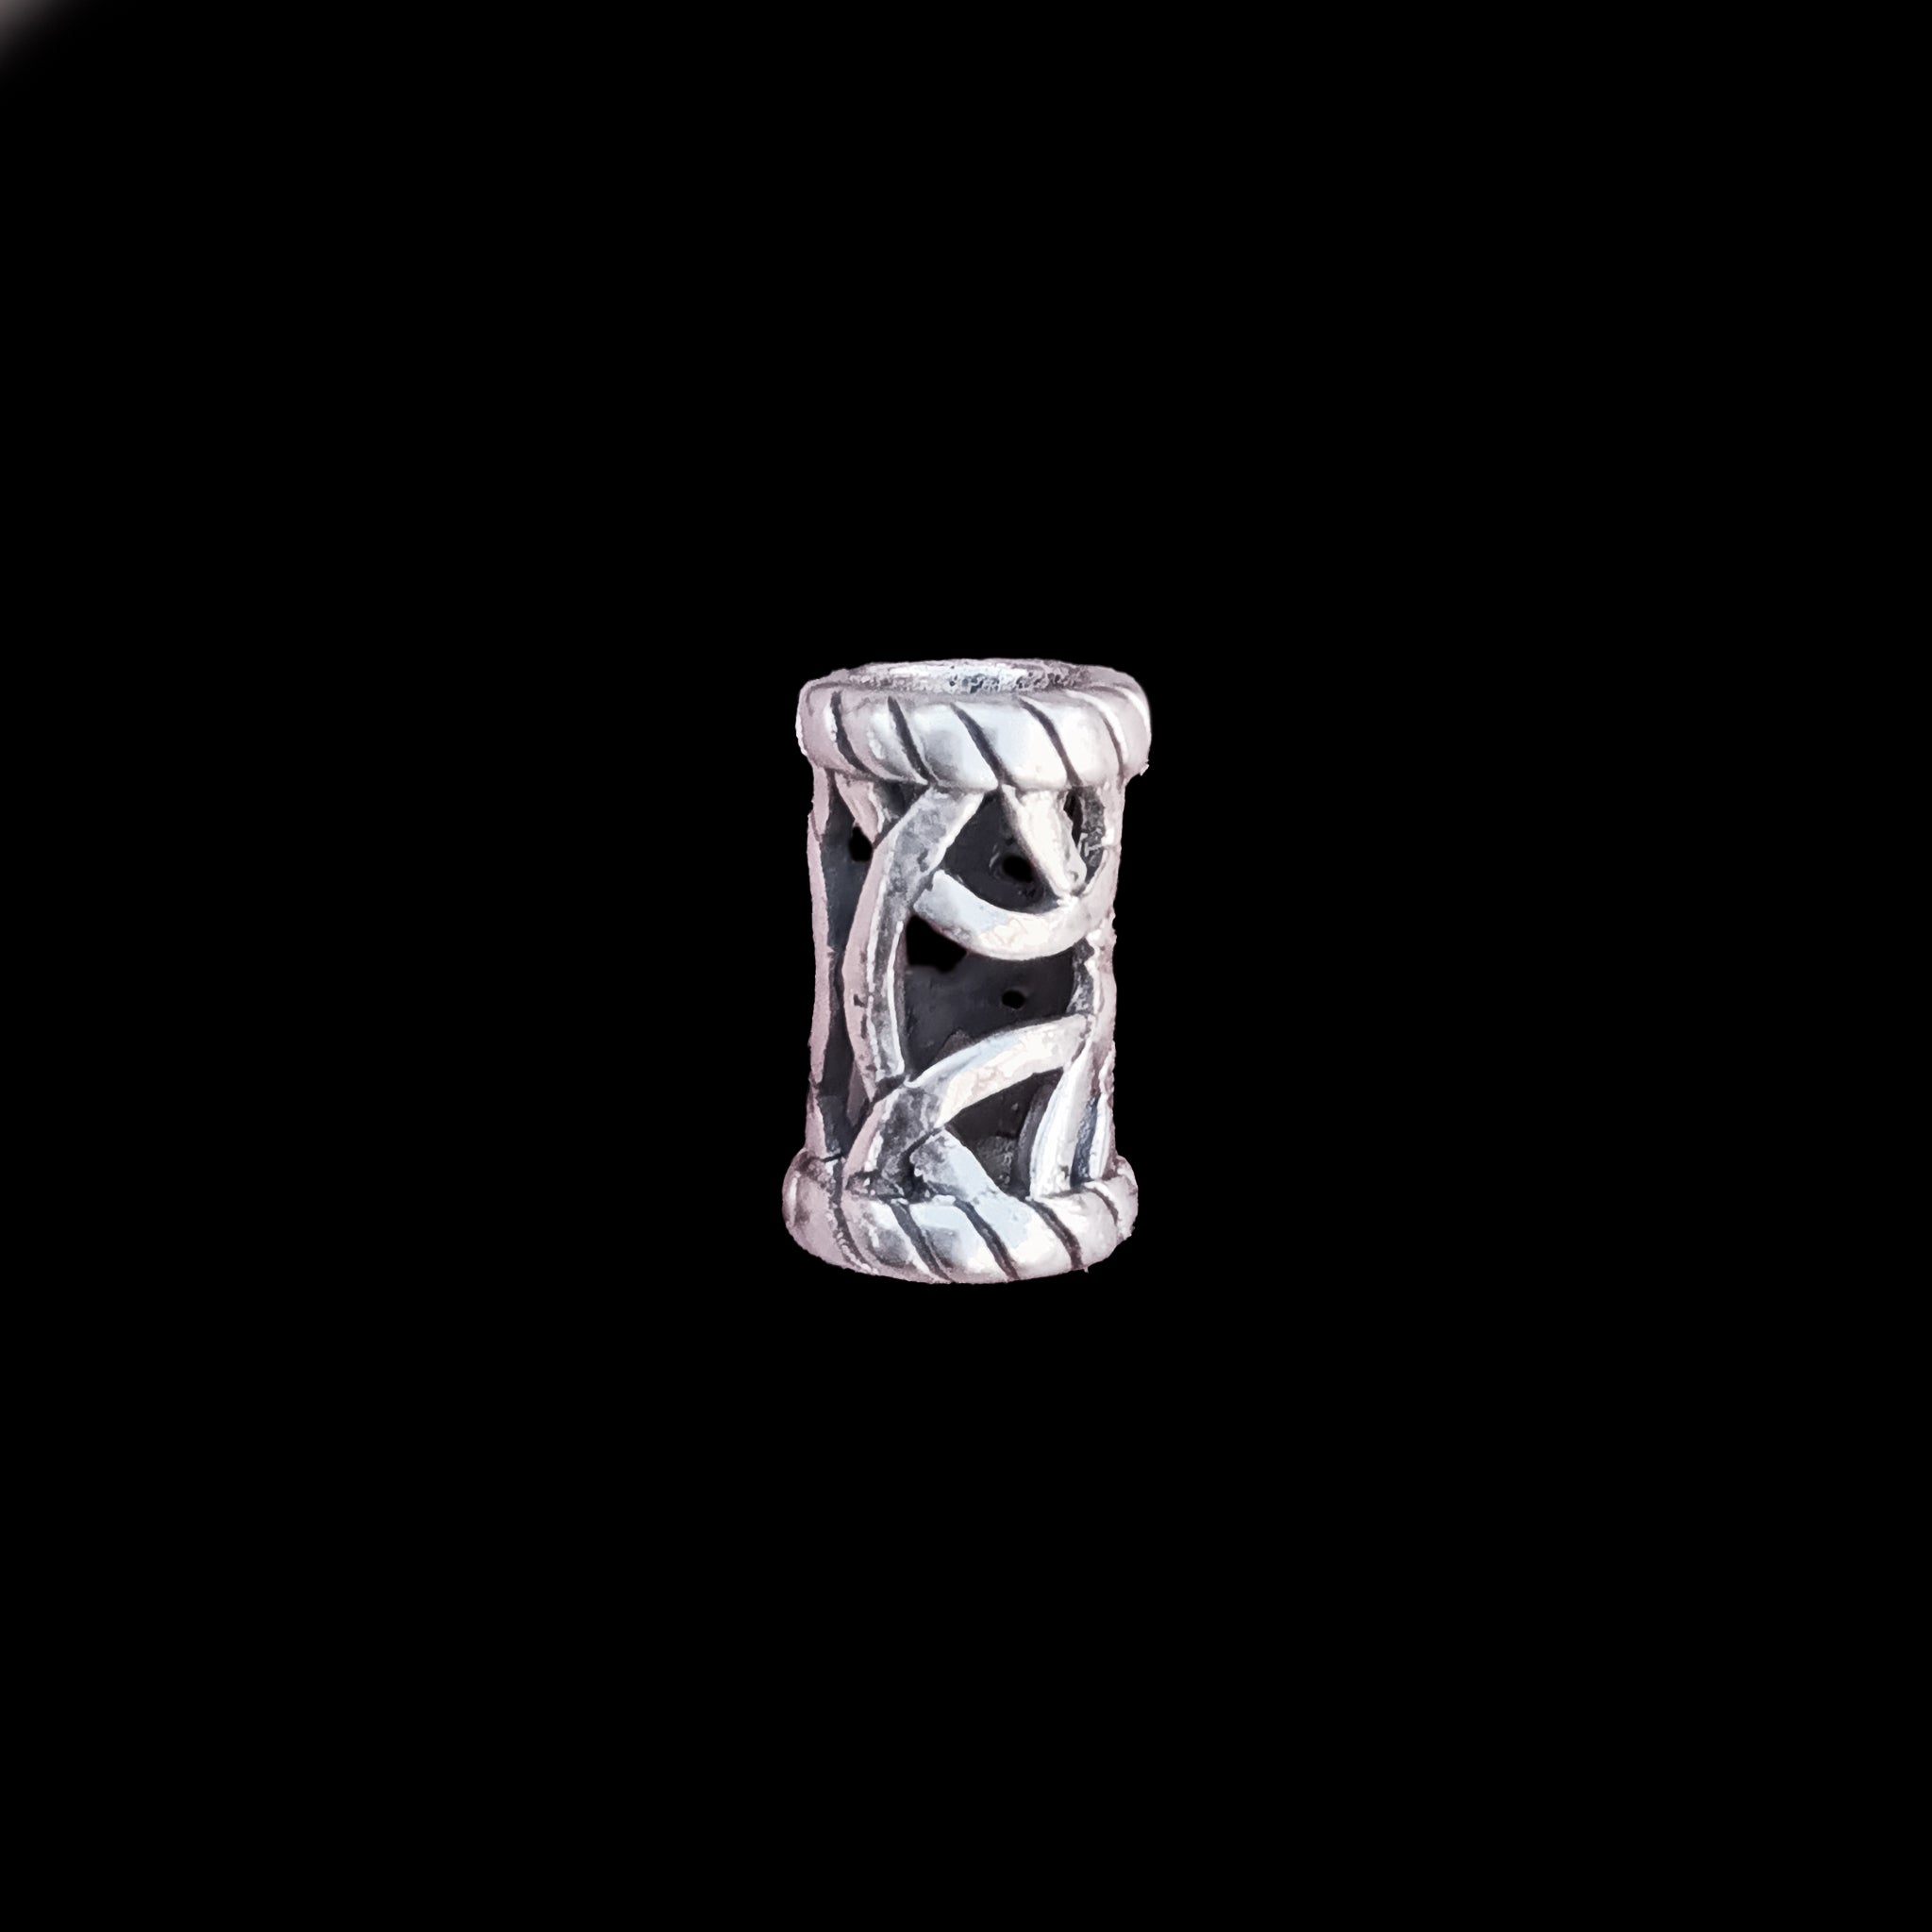 Small Sterling Silver Openwork Viking Beard Ring